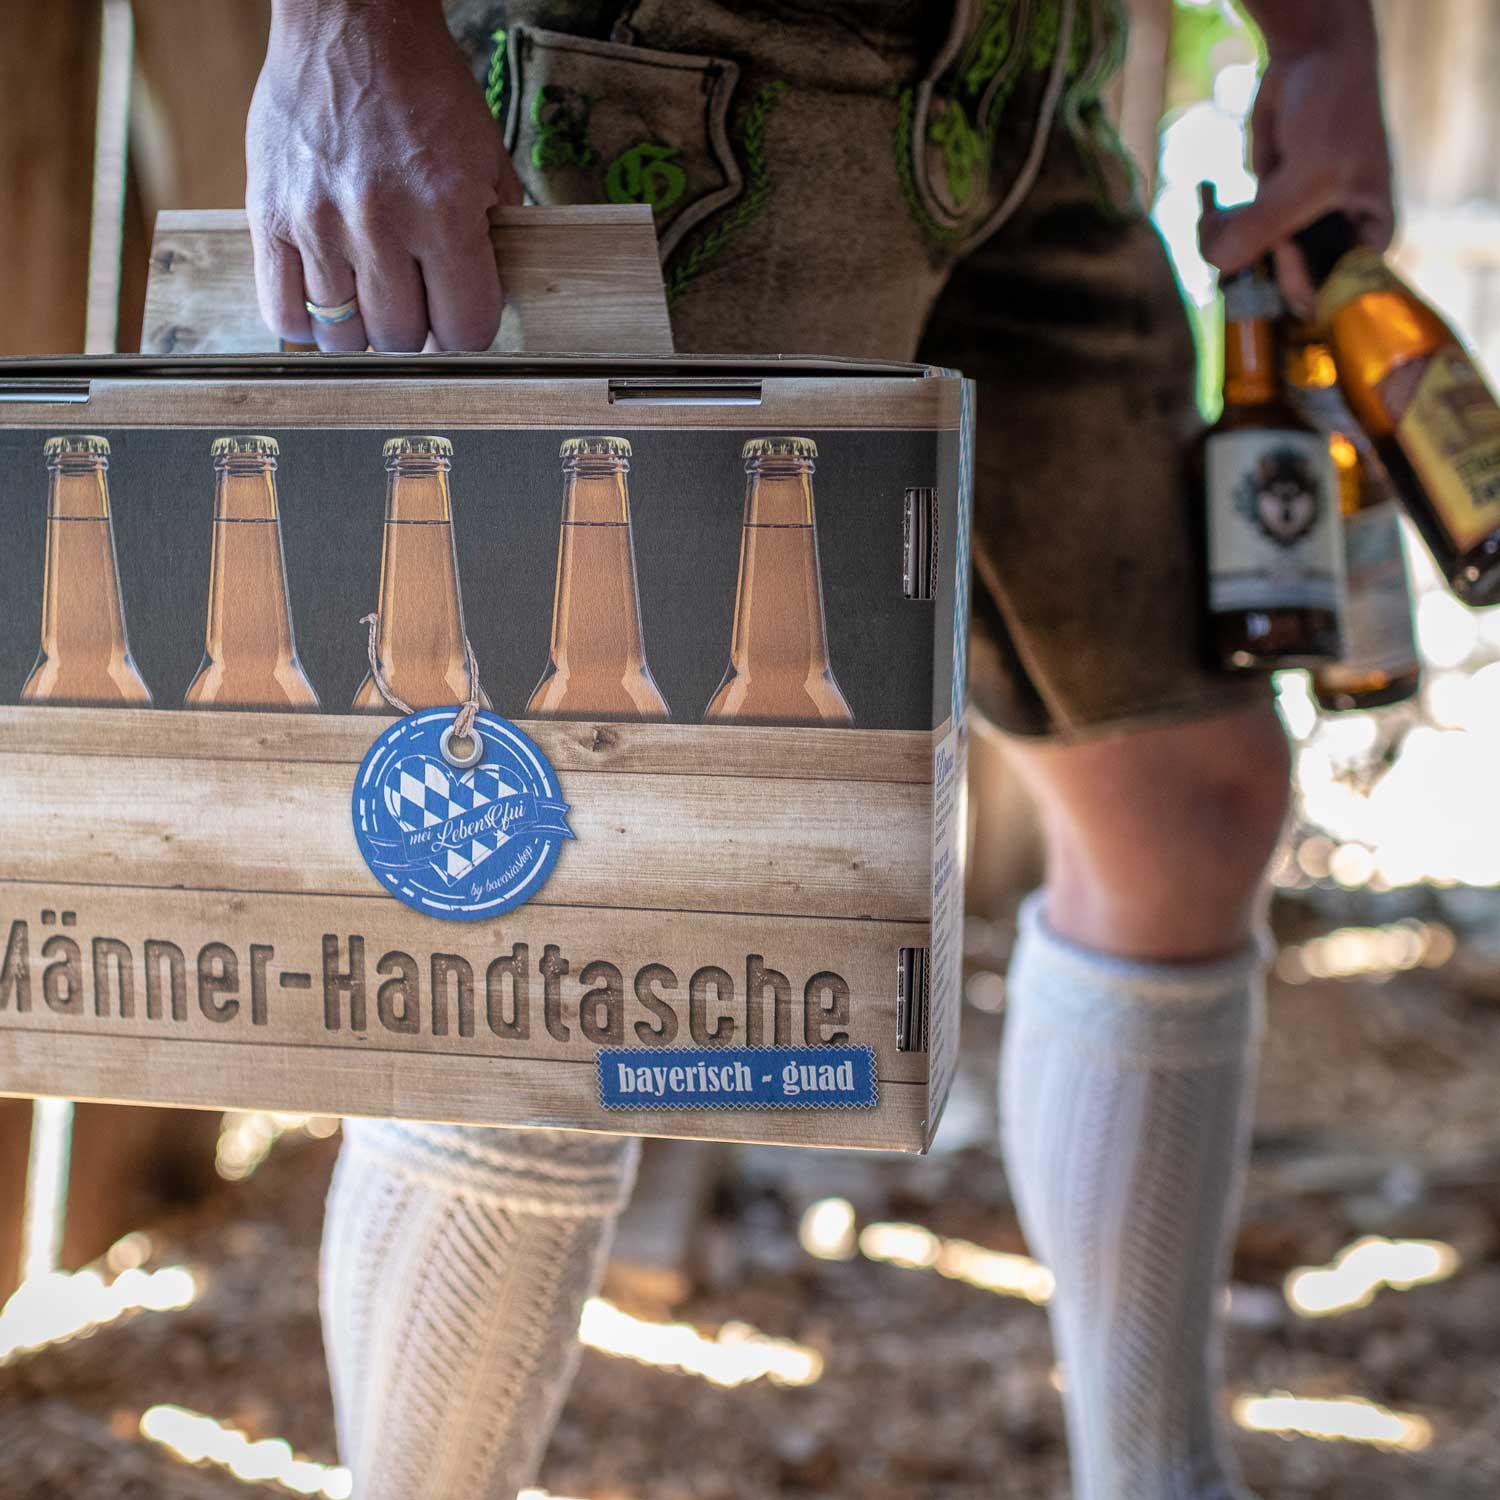 Bier-Geschenk "Männer-Handtasche" - bavariashop - mei LebensGfui